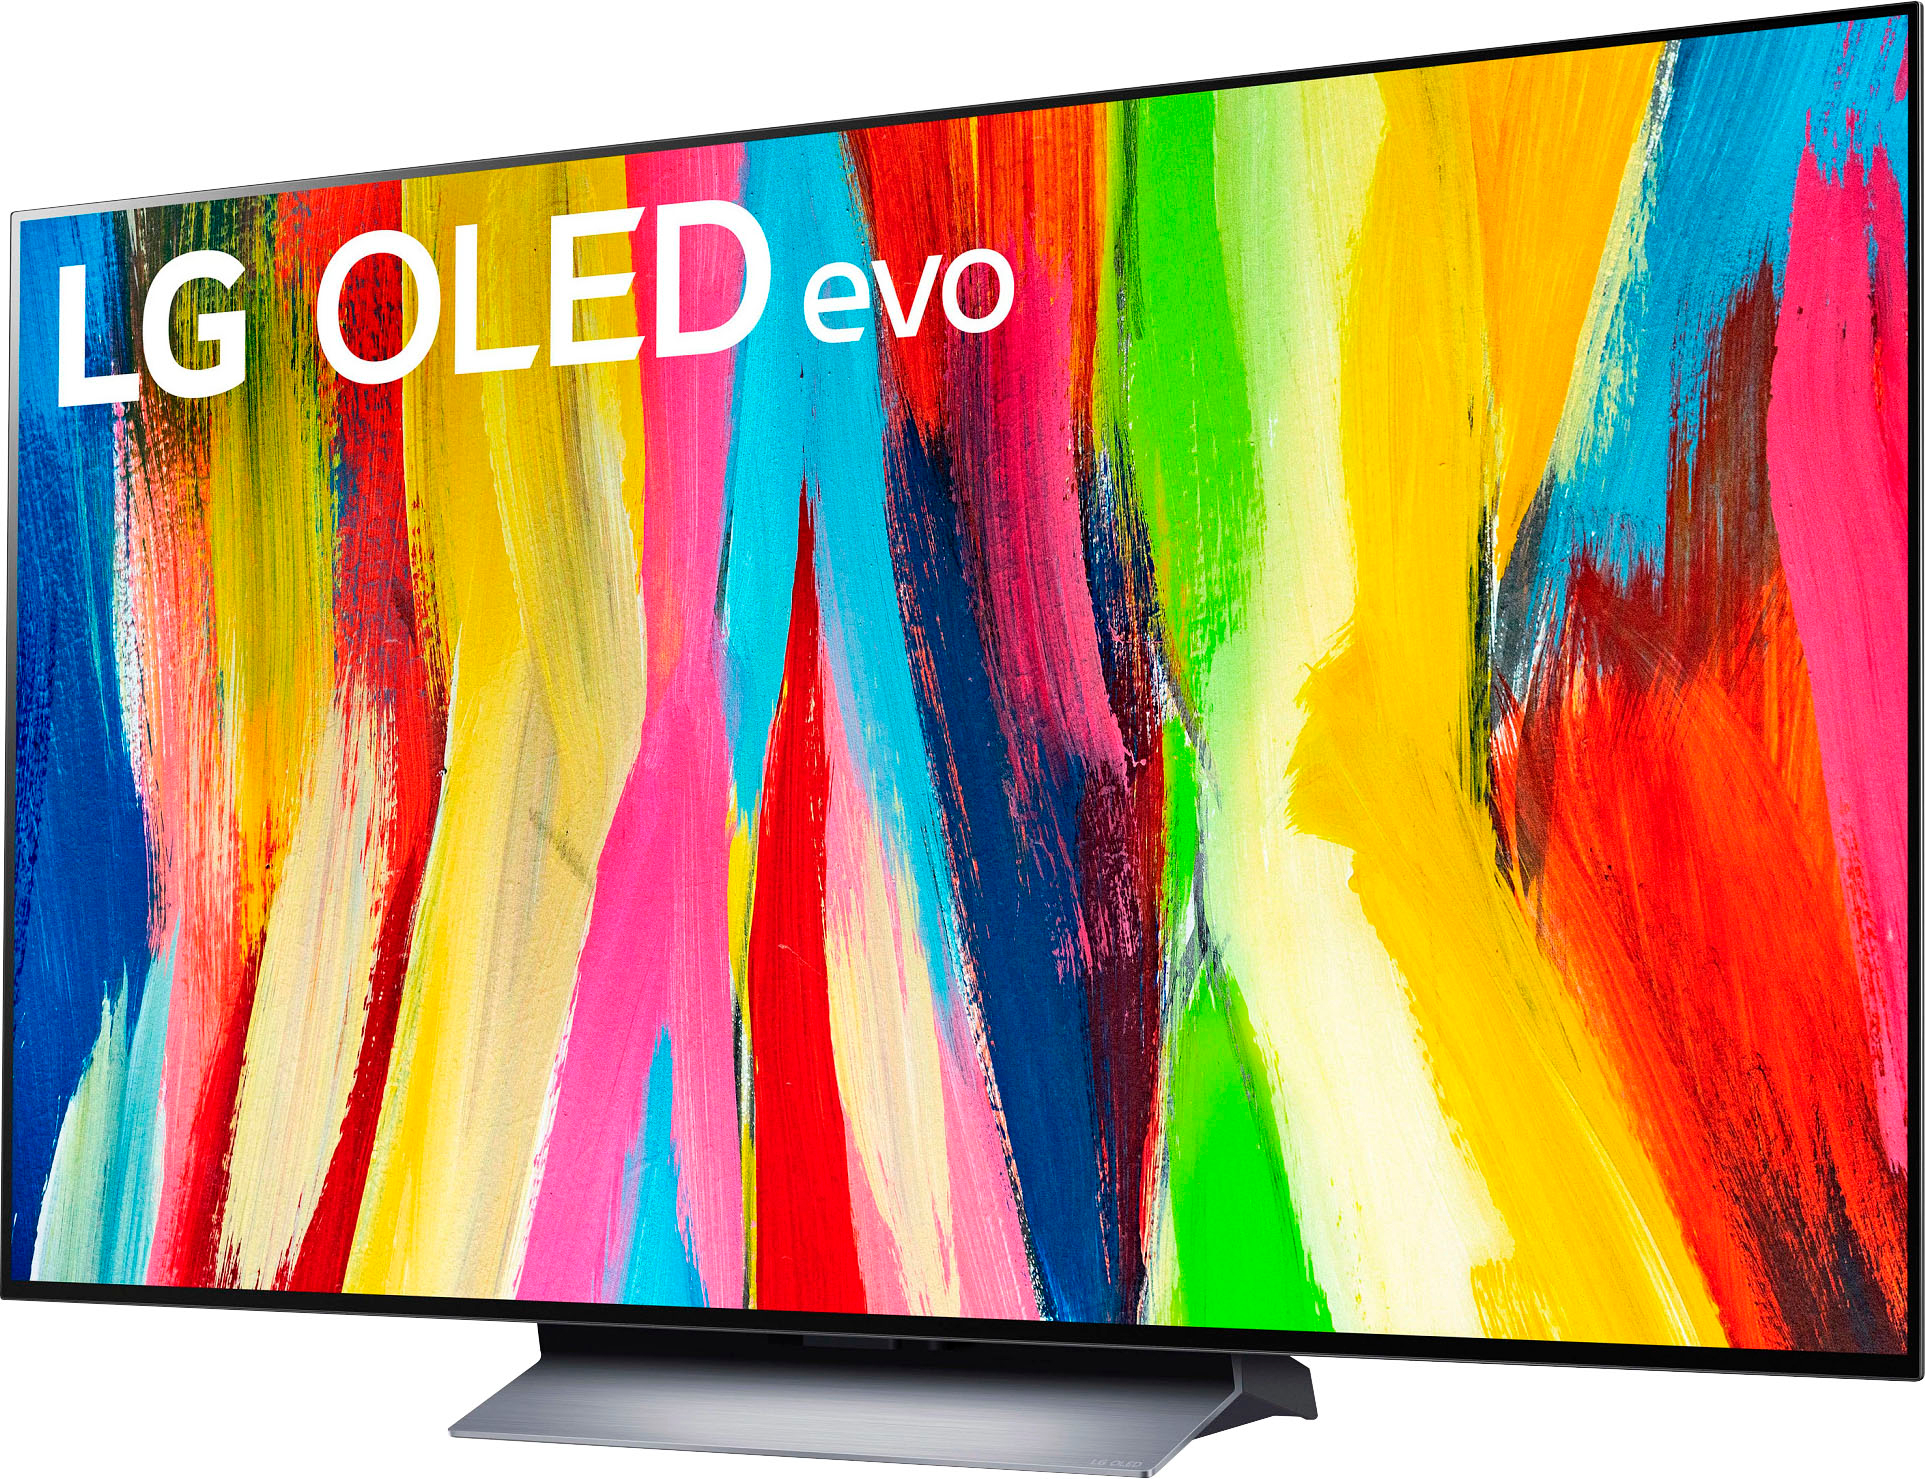 LG OLED42C2PUA TV Review - Consumer Reports